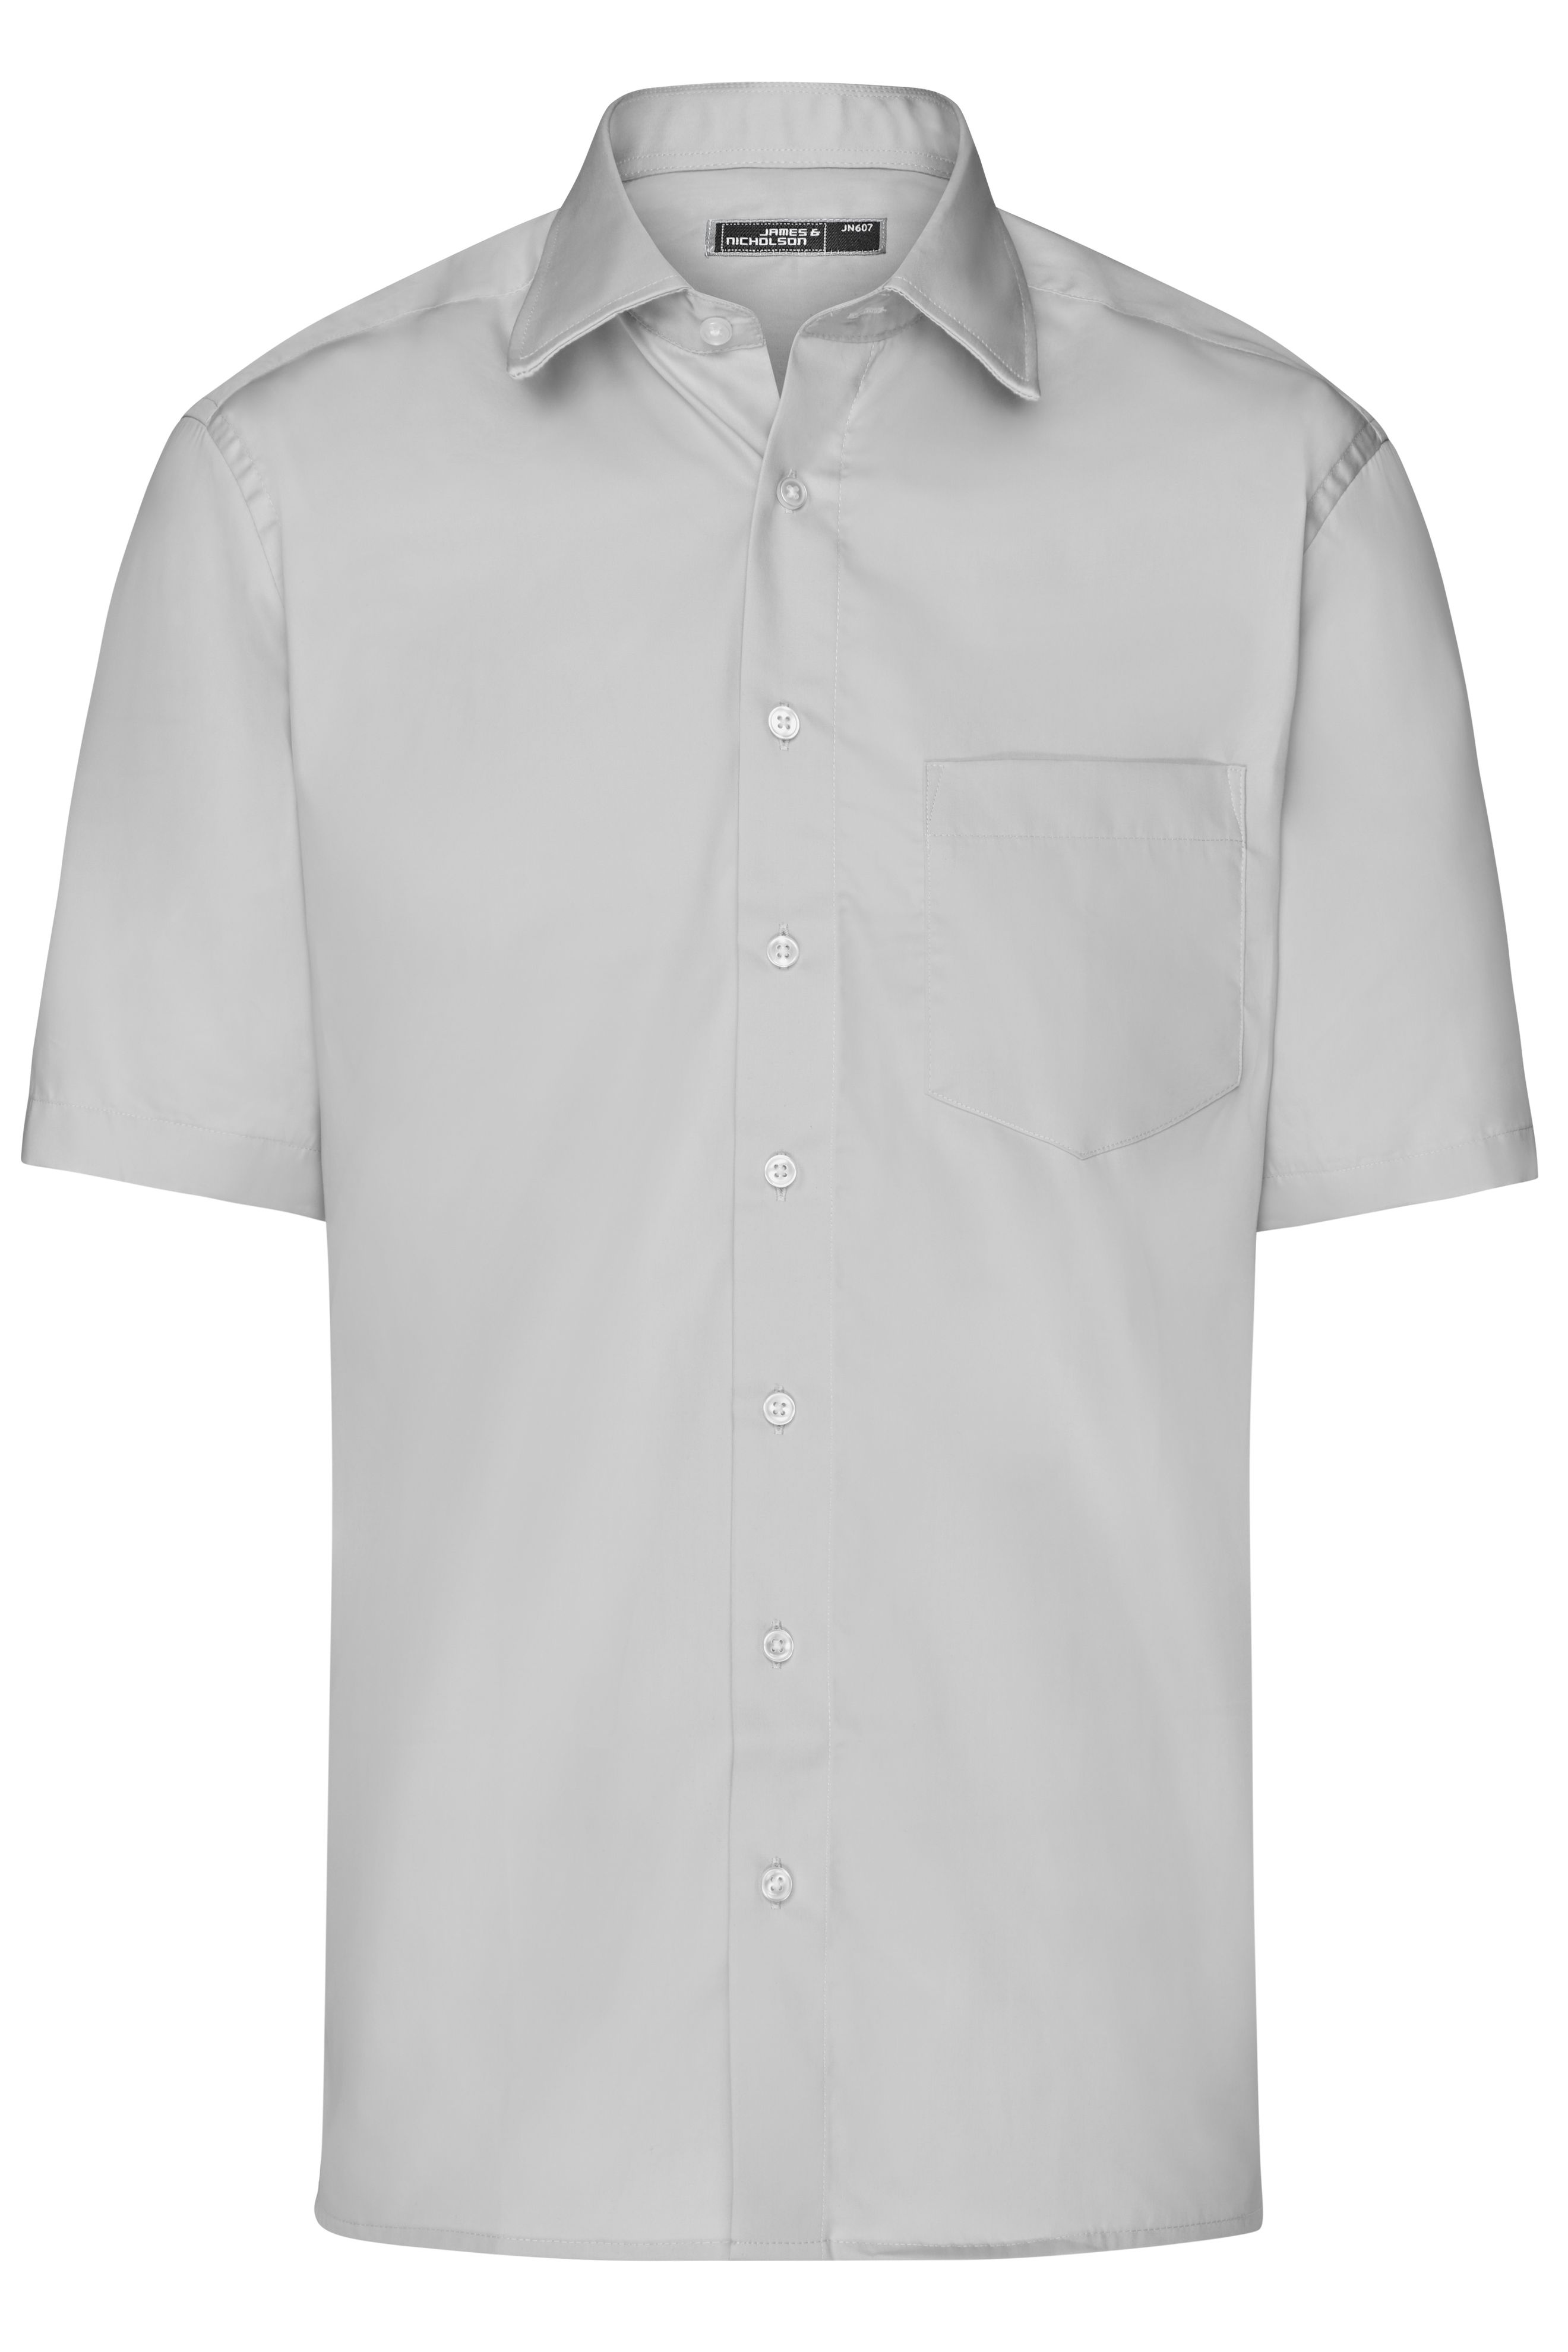 Men's Business Shirt Short-Sleeved JN607 Bügelleichtes, modisches Herrenhemd